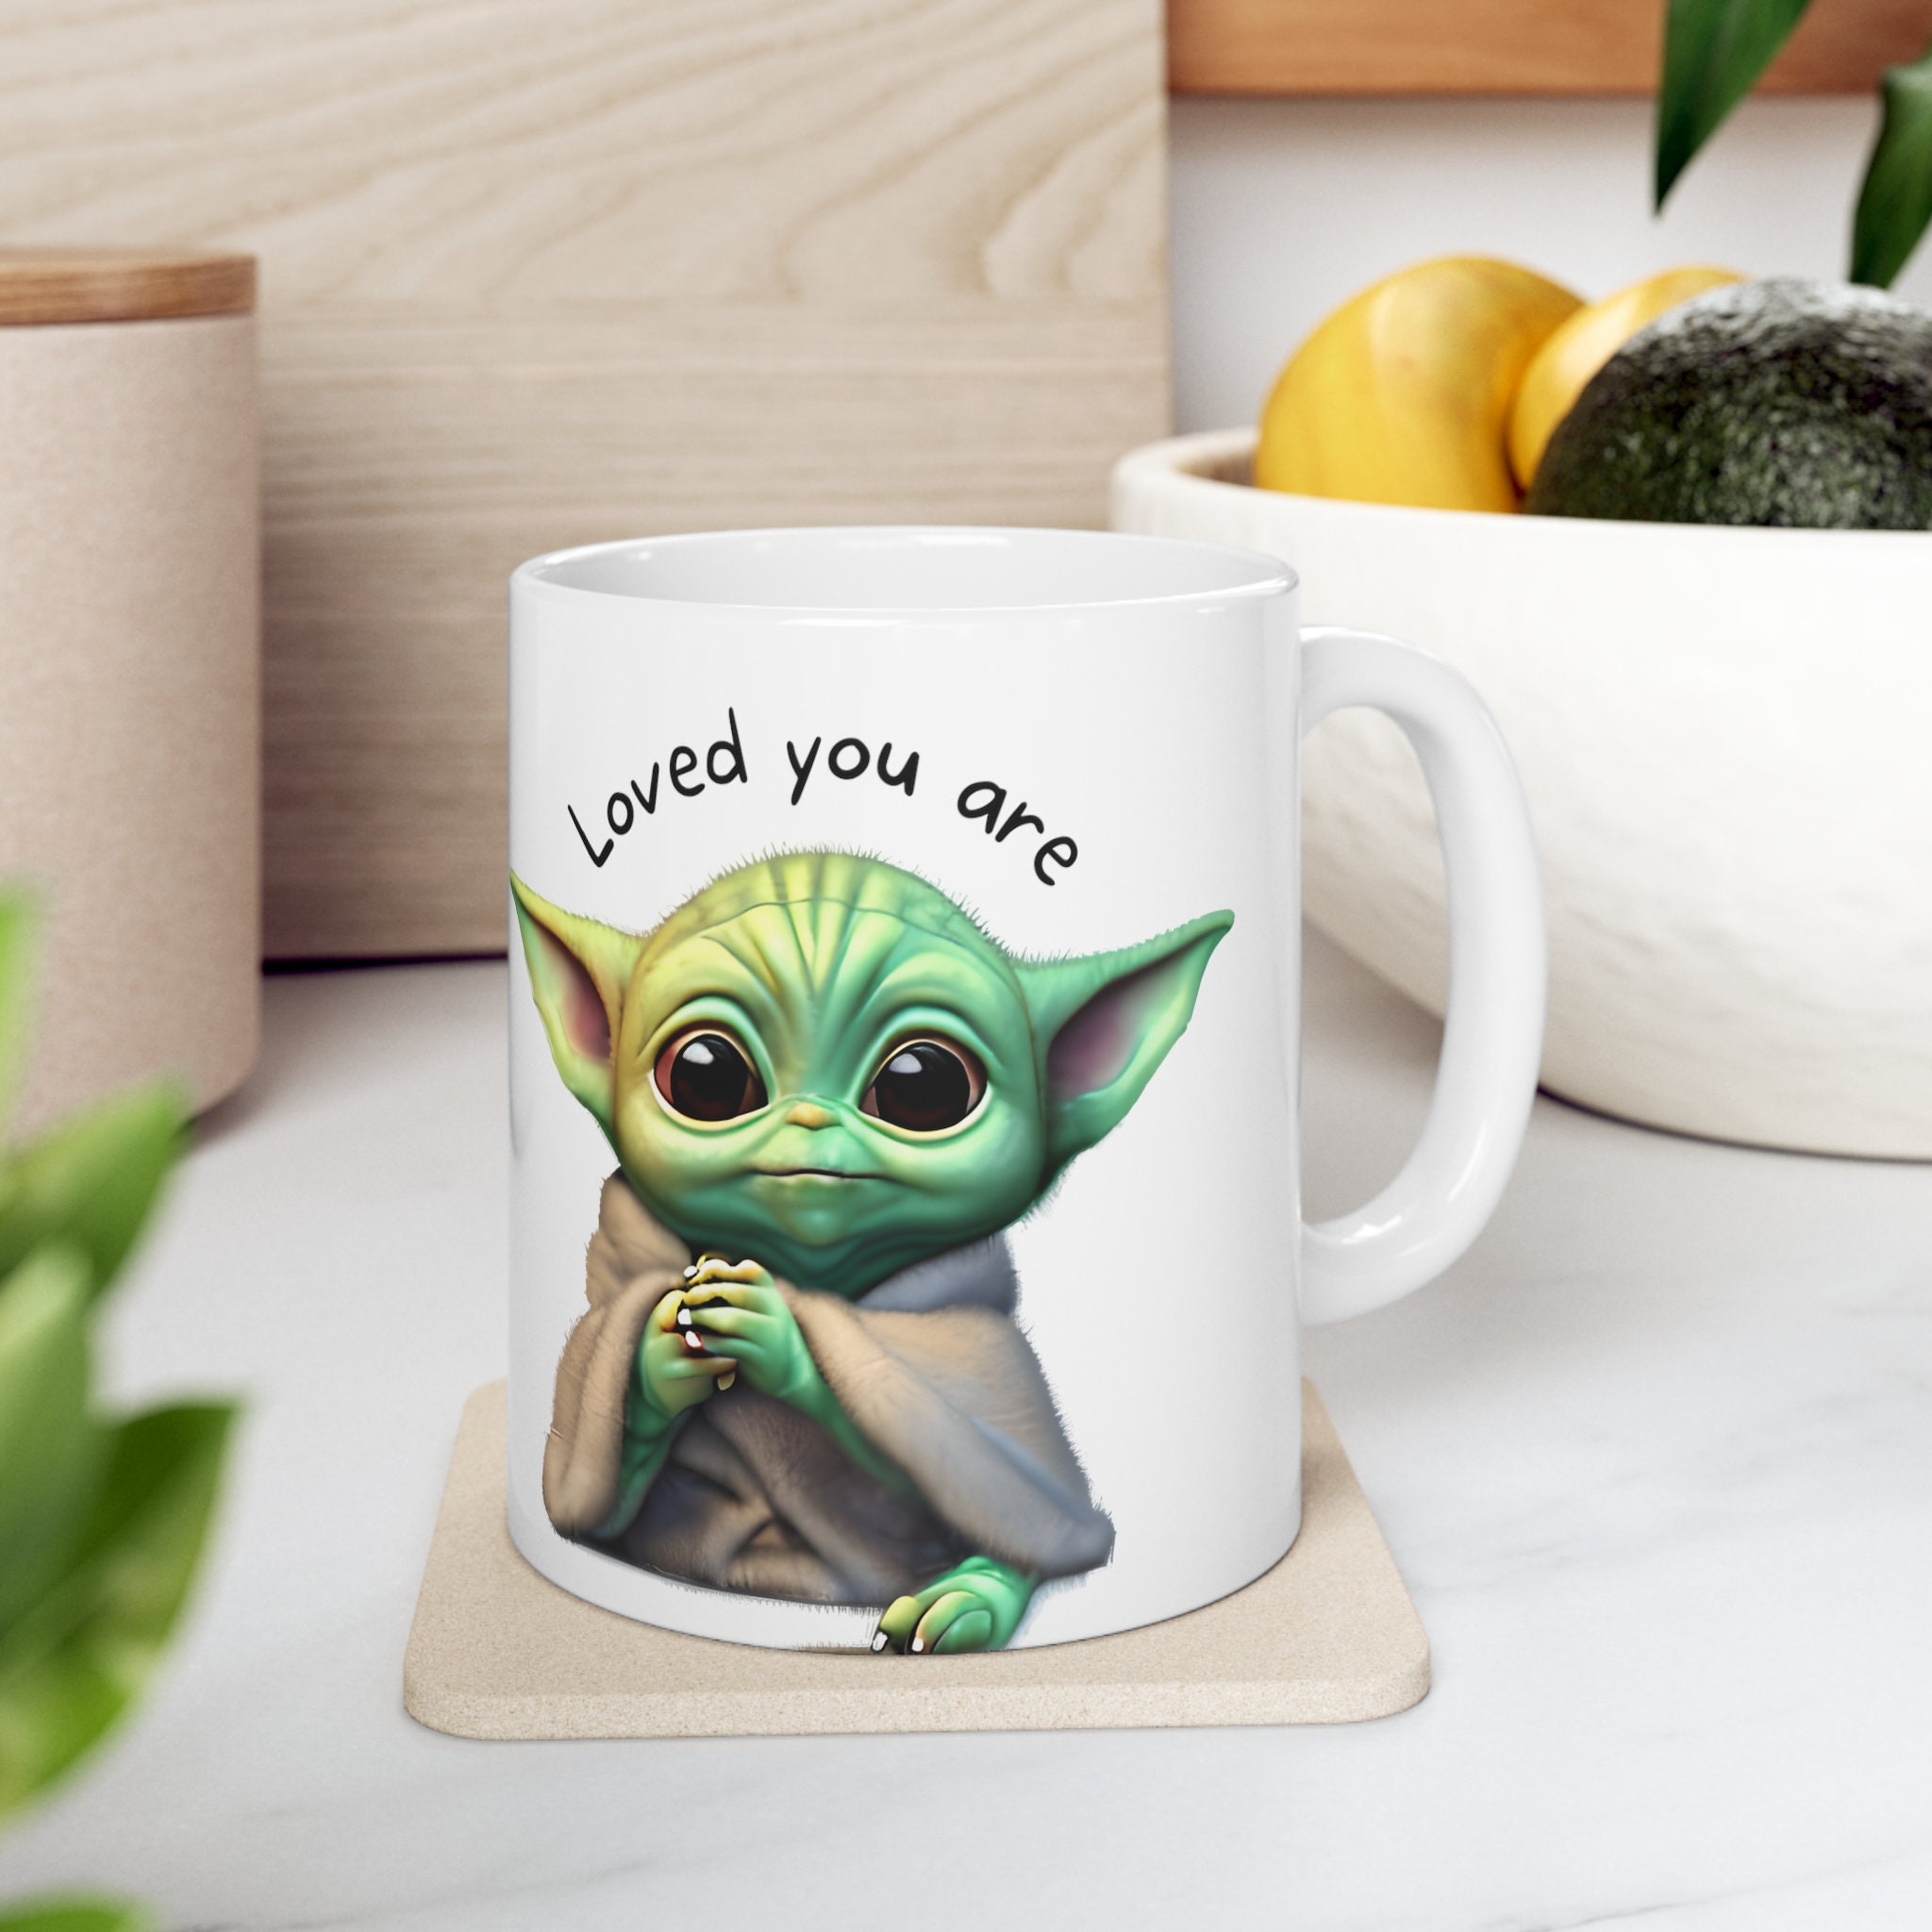 A Baby Yoda cup I found at target today : r/BabyYoda